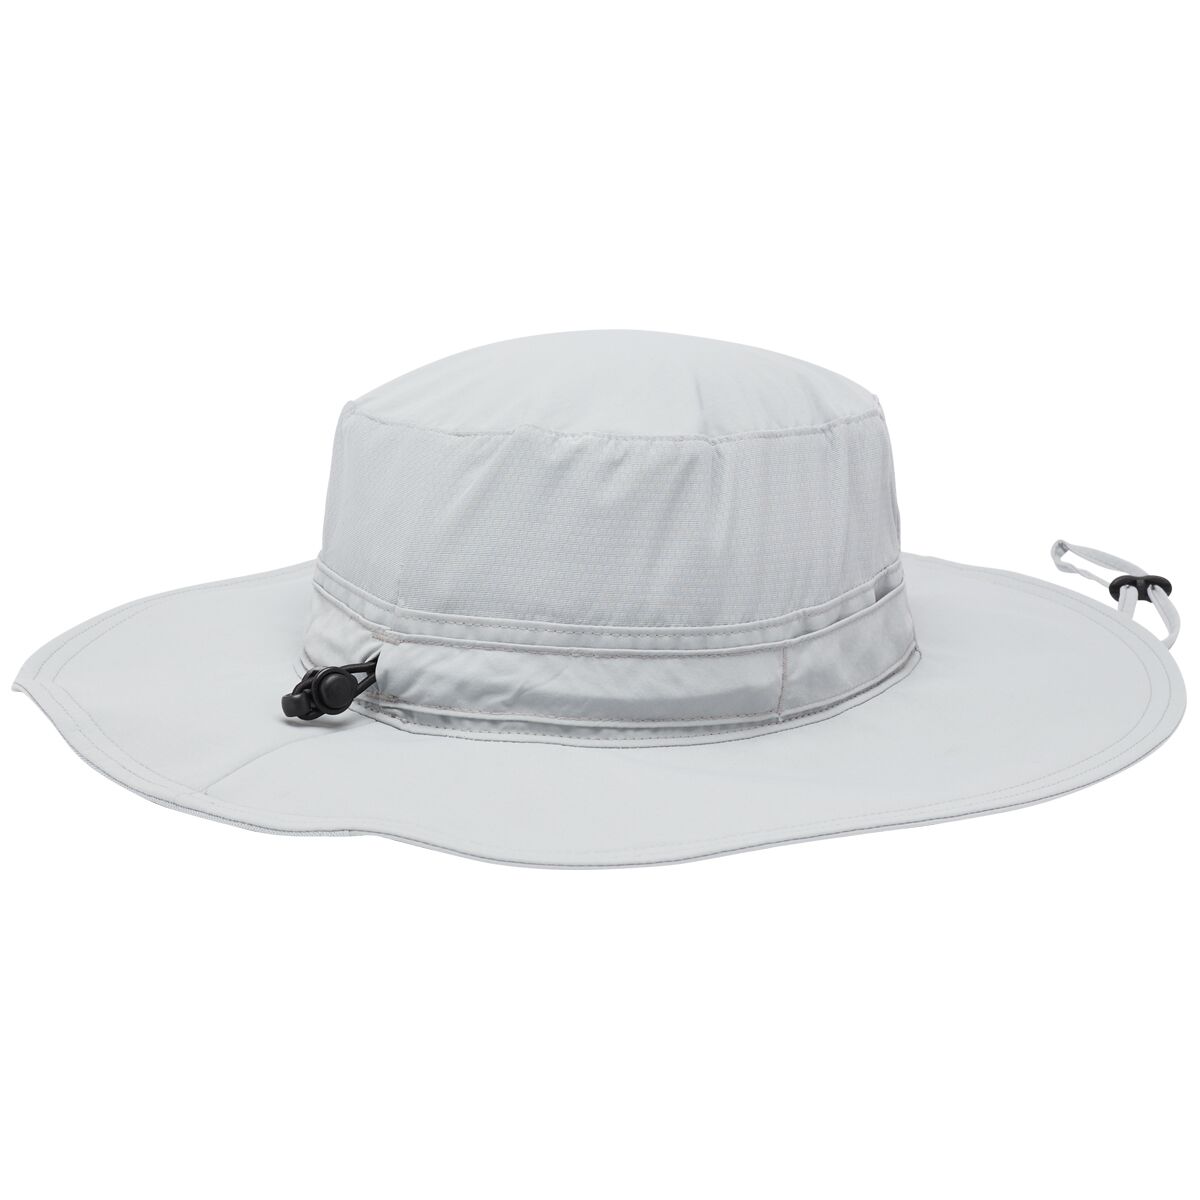 Columbia Sportswear Coolhead Zero Booney Hat Travel Hats